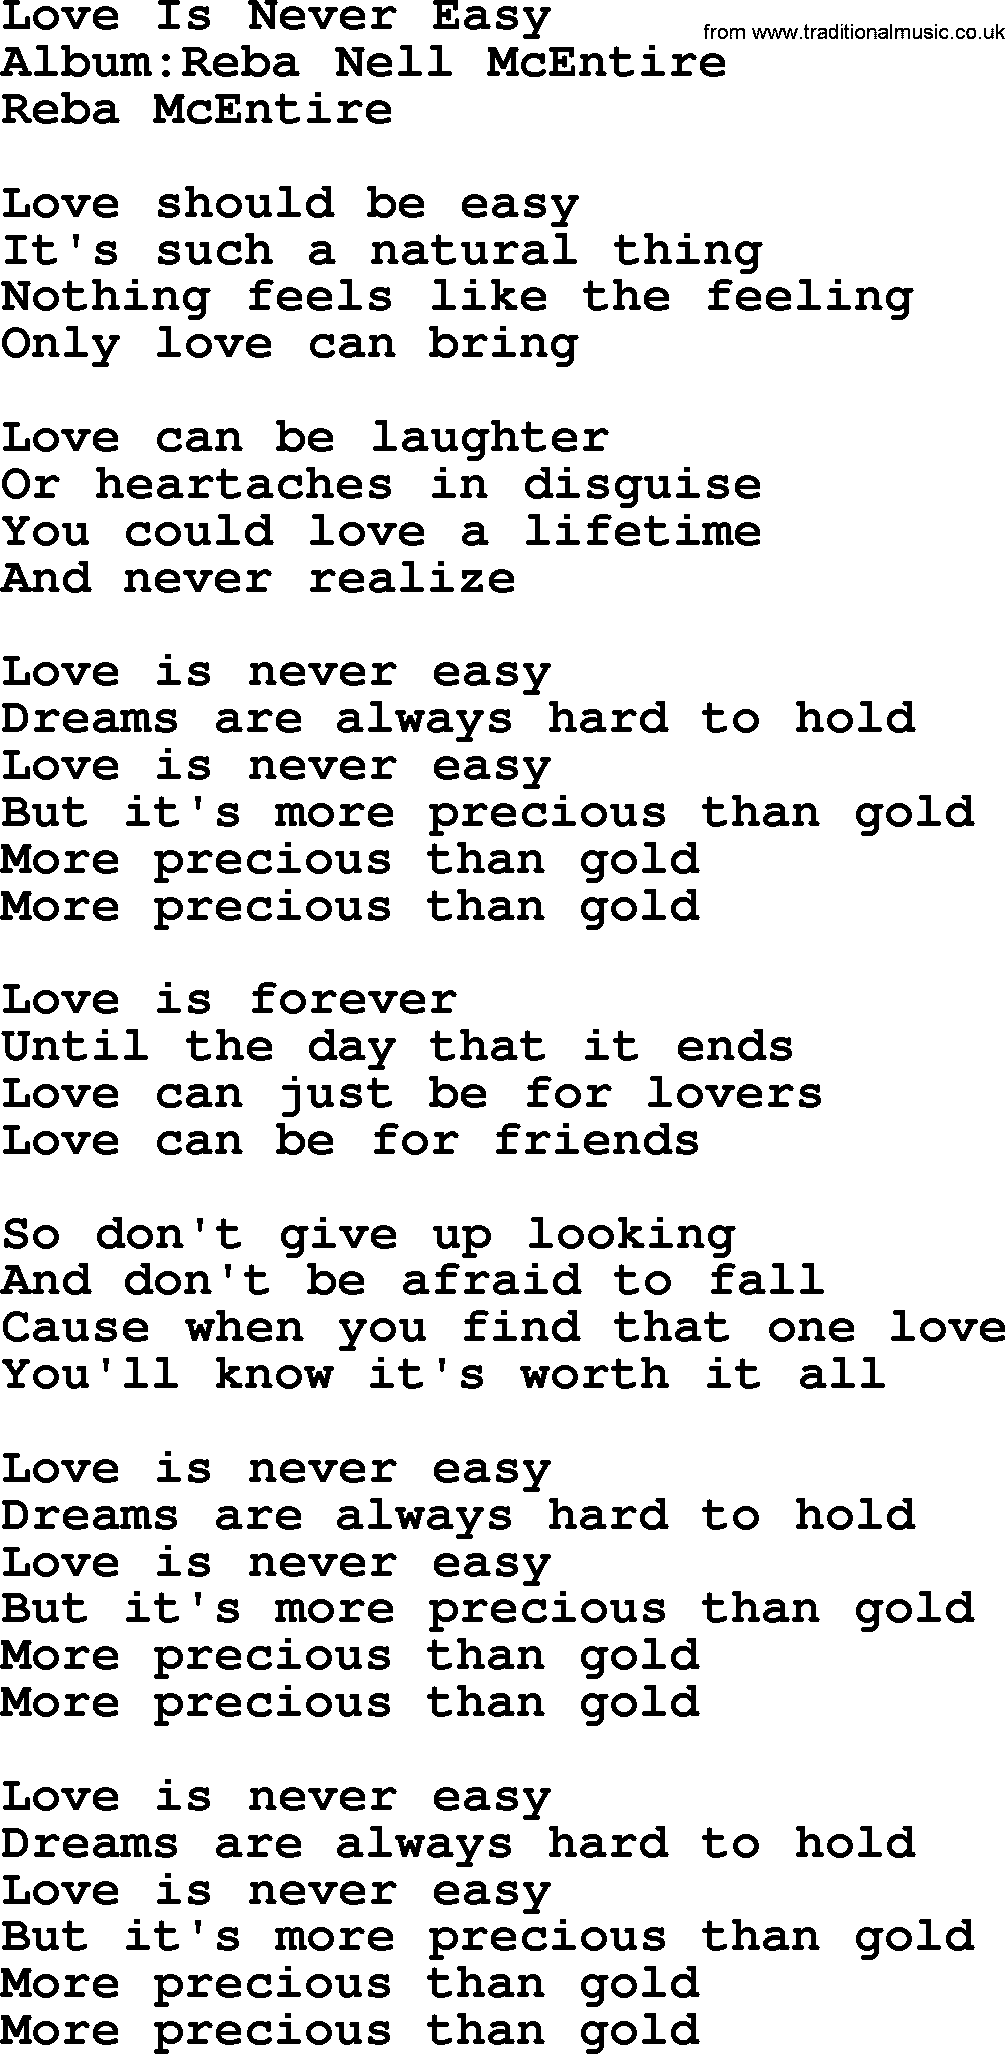 Reba McEntire song: Love Is Never Easy lyrics